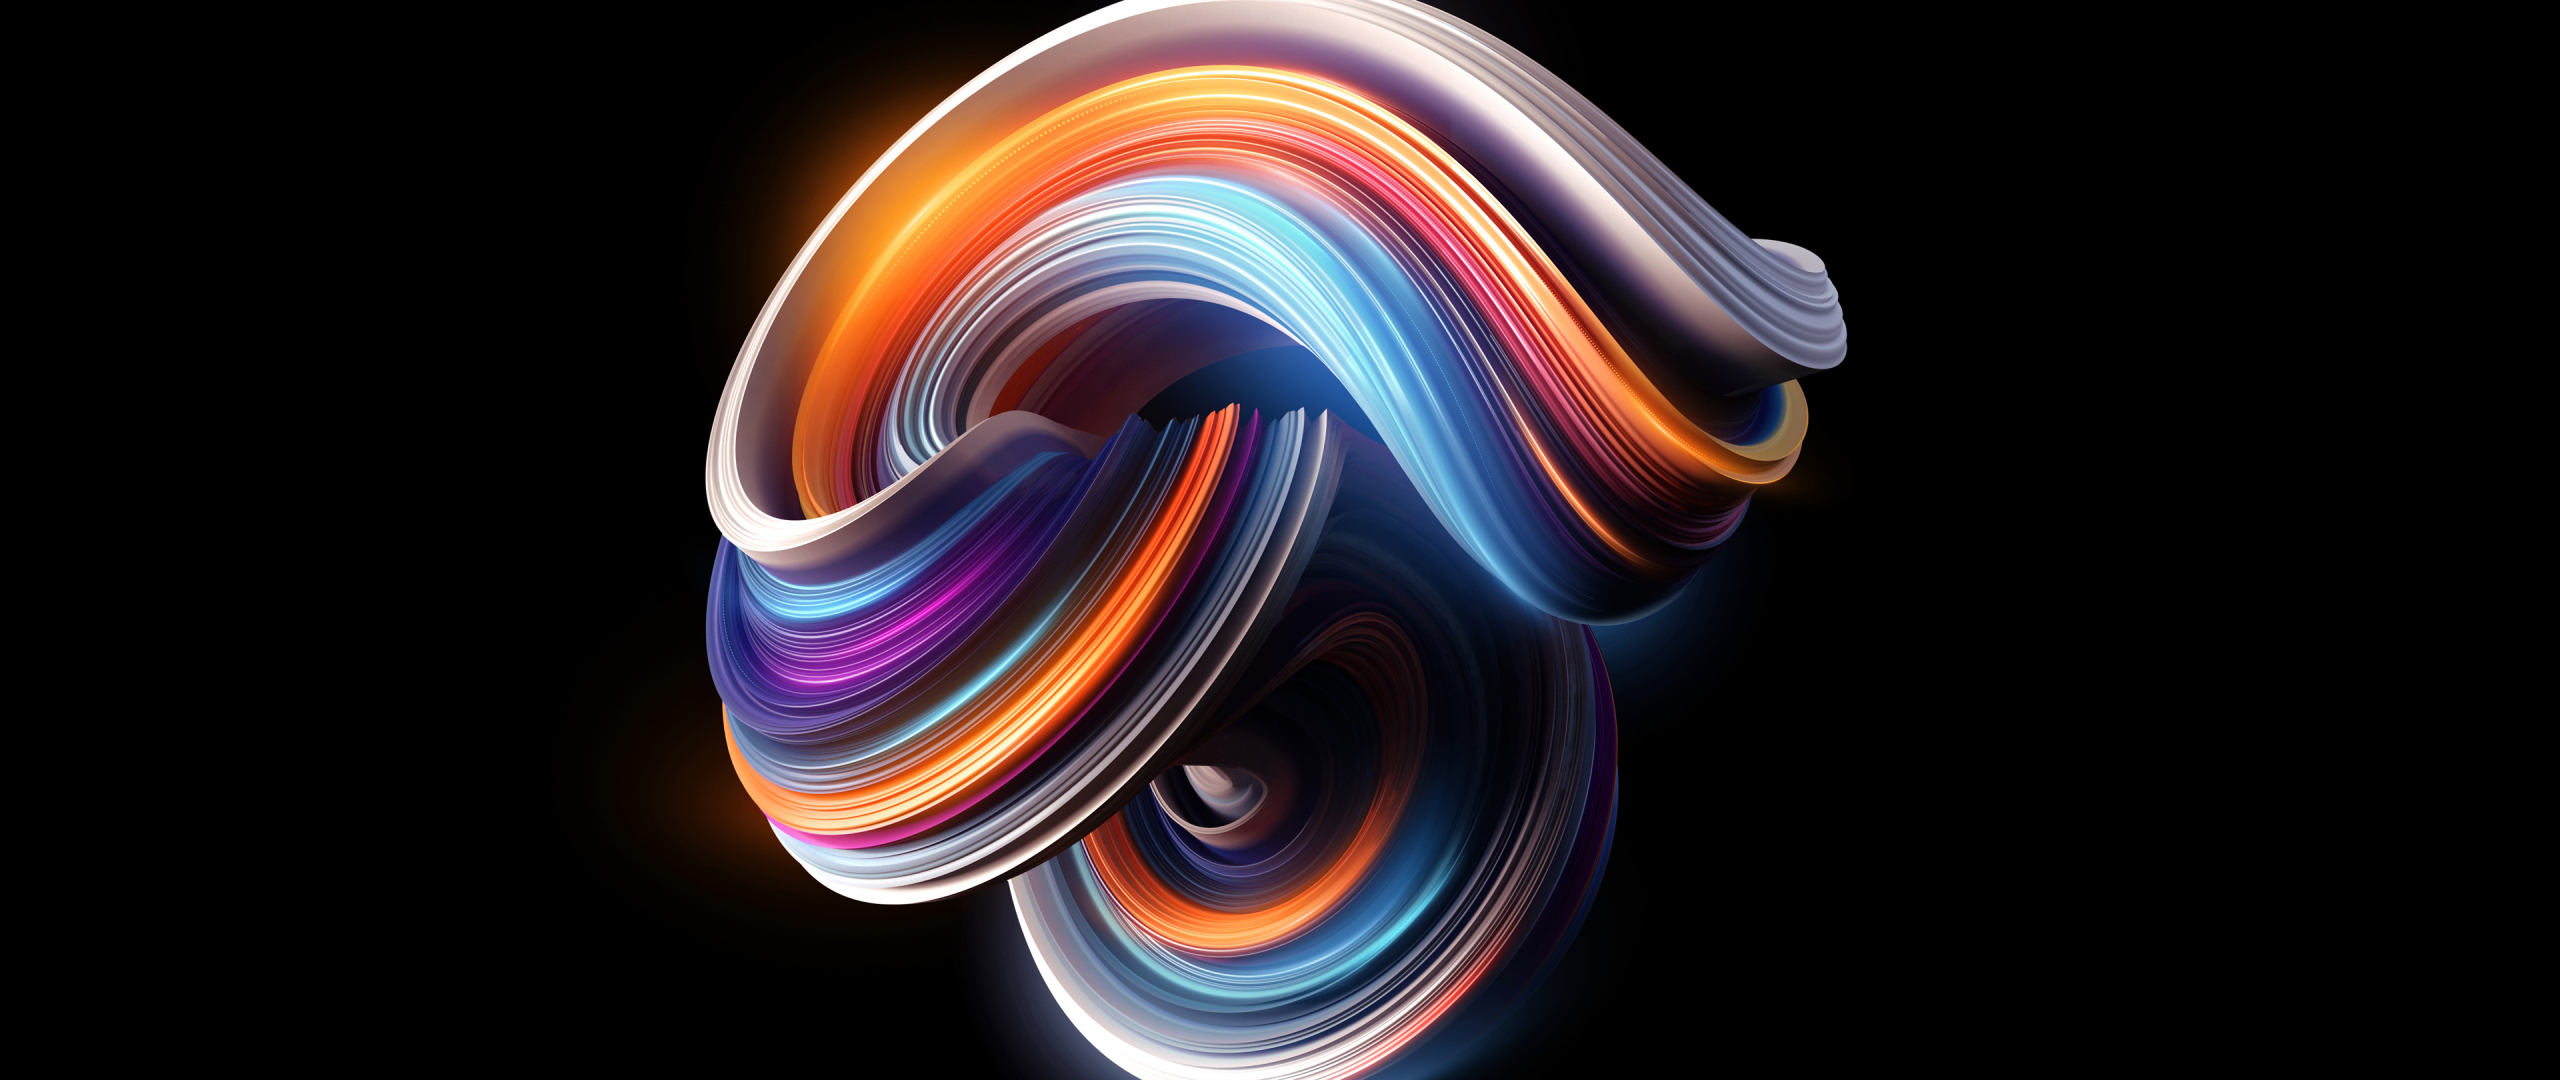 Desktop Wallpaper Colorful, Curves, Mi Stock, Abstract, 4k, Hd Image